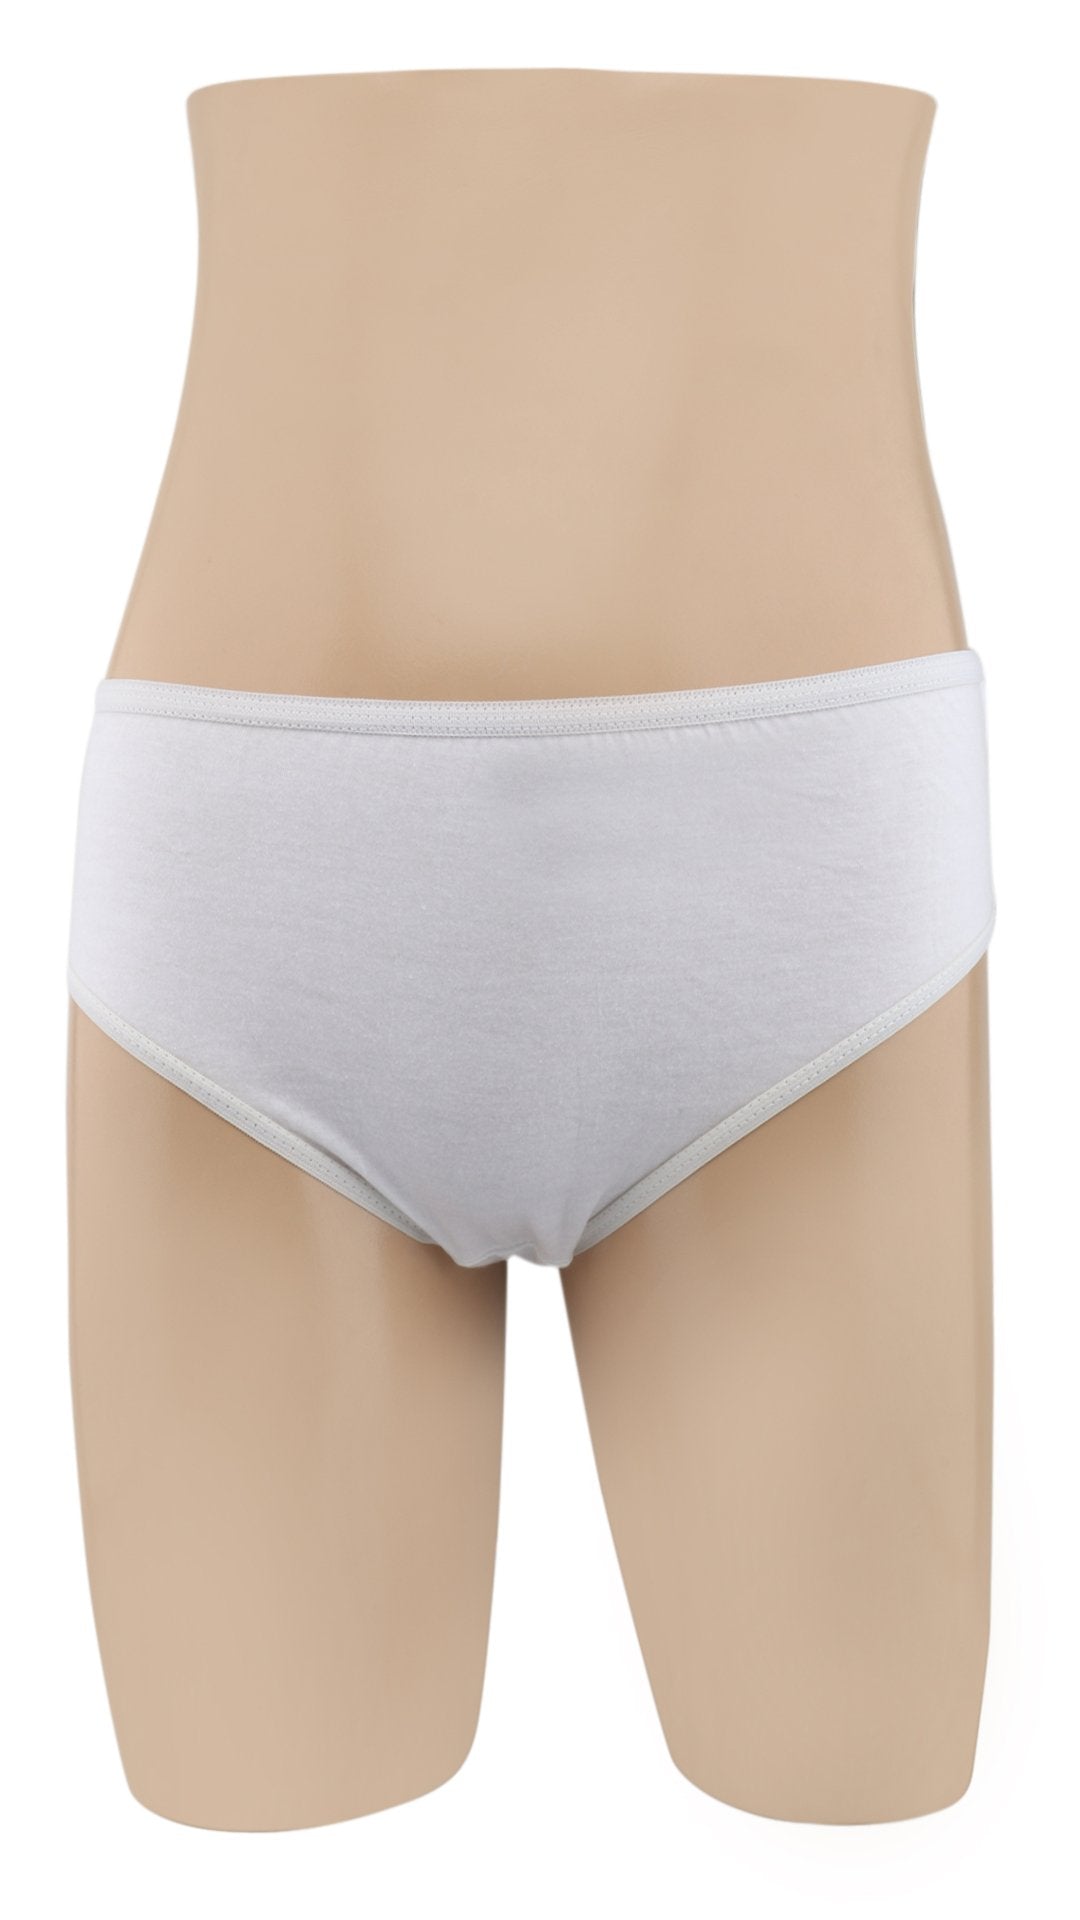 BLAZON Premium Women's Super Soft Cotton Hoisery Plain Mid Rise Hipster (Outer-Elastic) Panty |Combo Pack| Available Sizes: (S, M, L, XL, 2XL, 3XL, 4XL, 5XL) - White, Black, Brown, Navy Blue